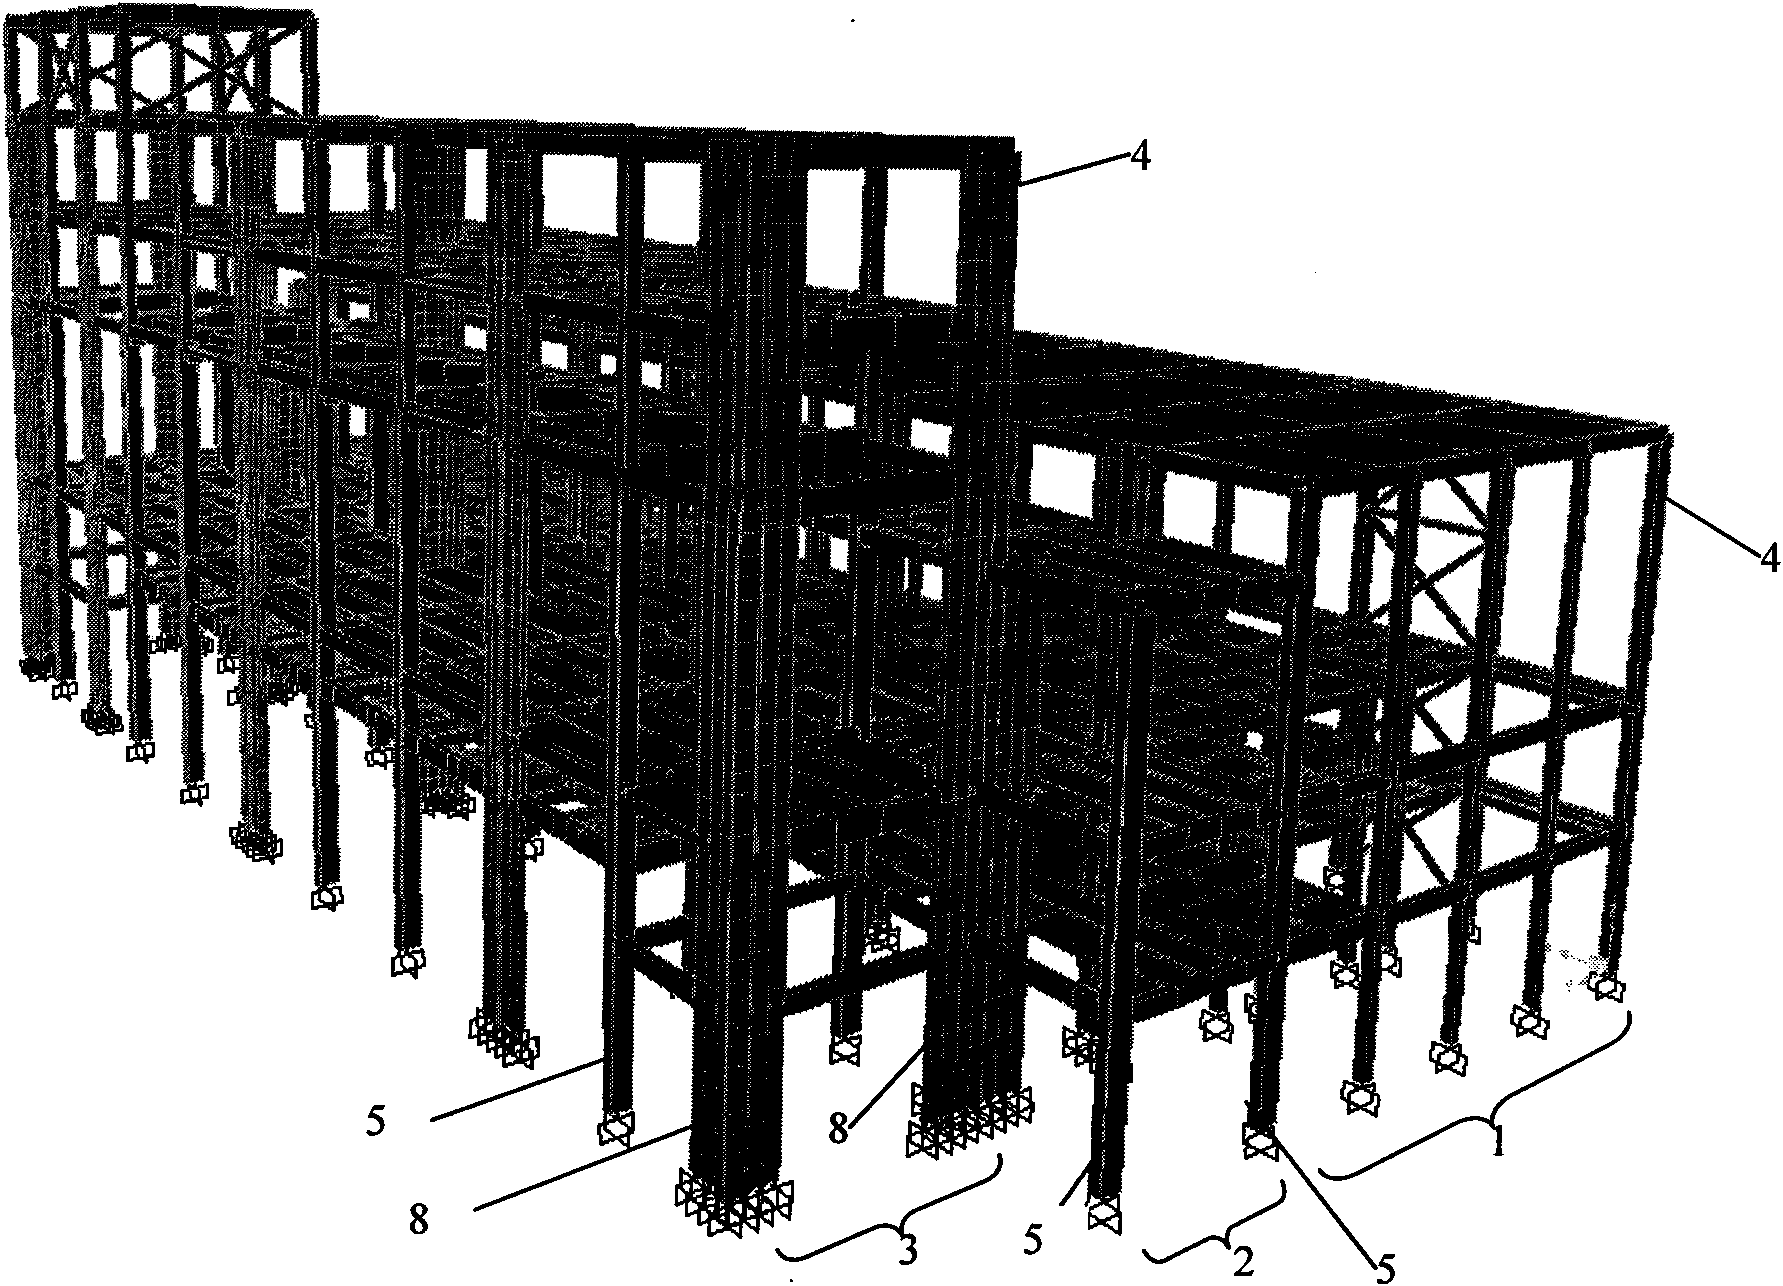 Main workshop structure of large heat power plant